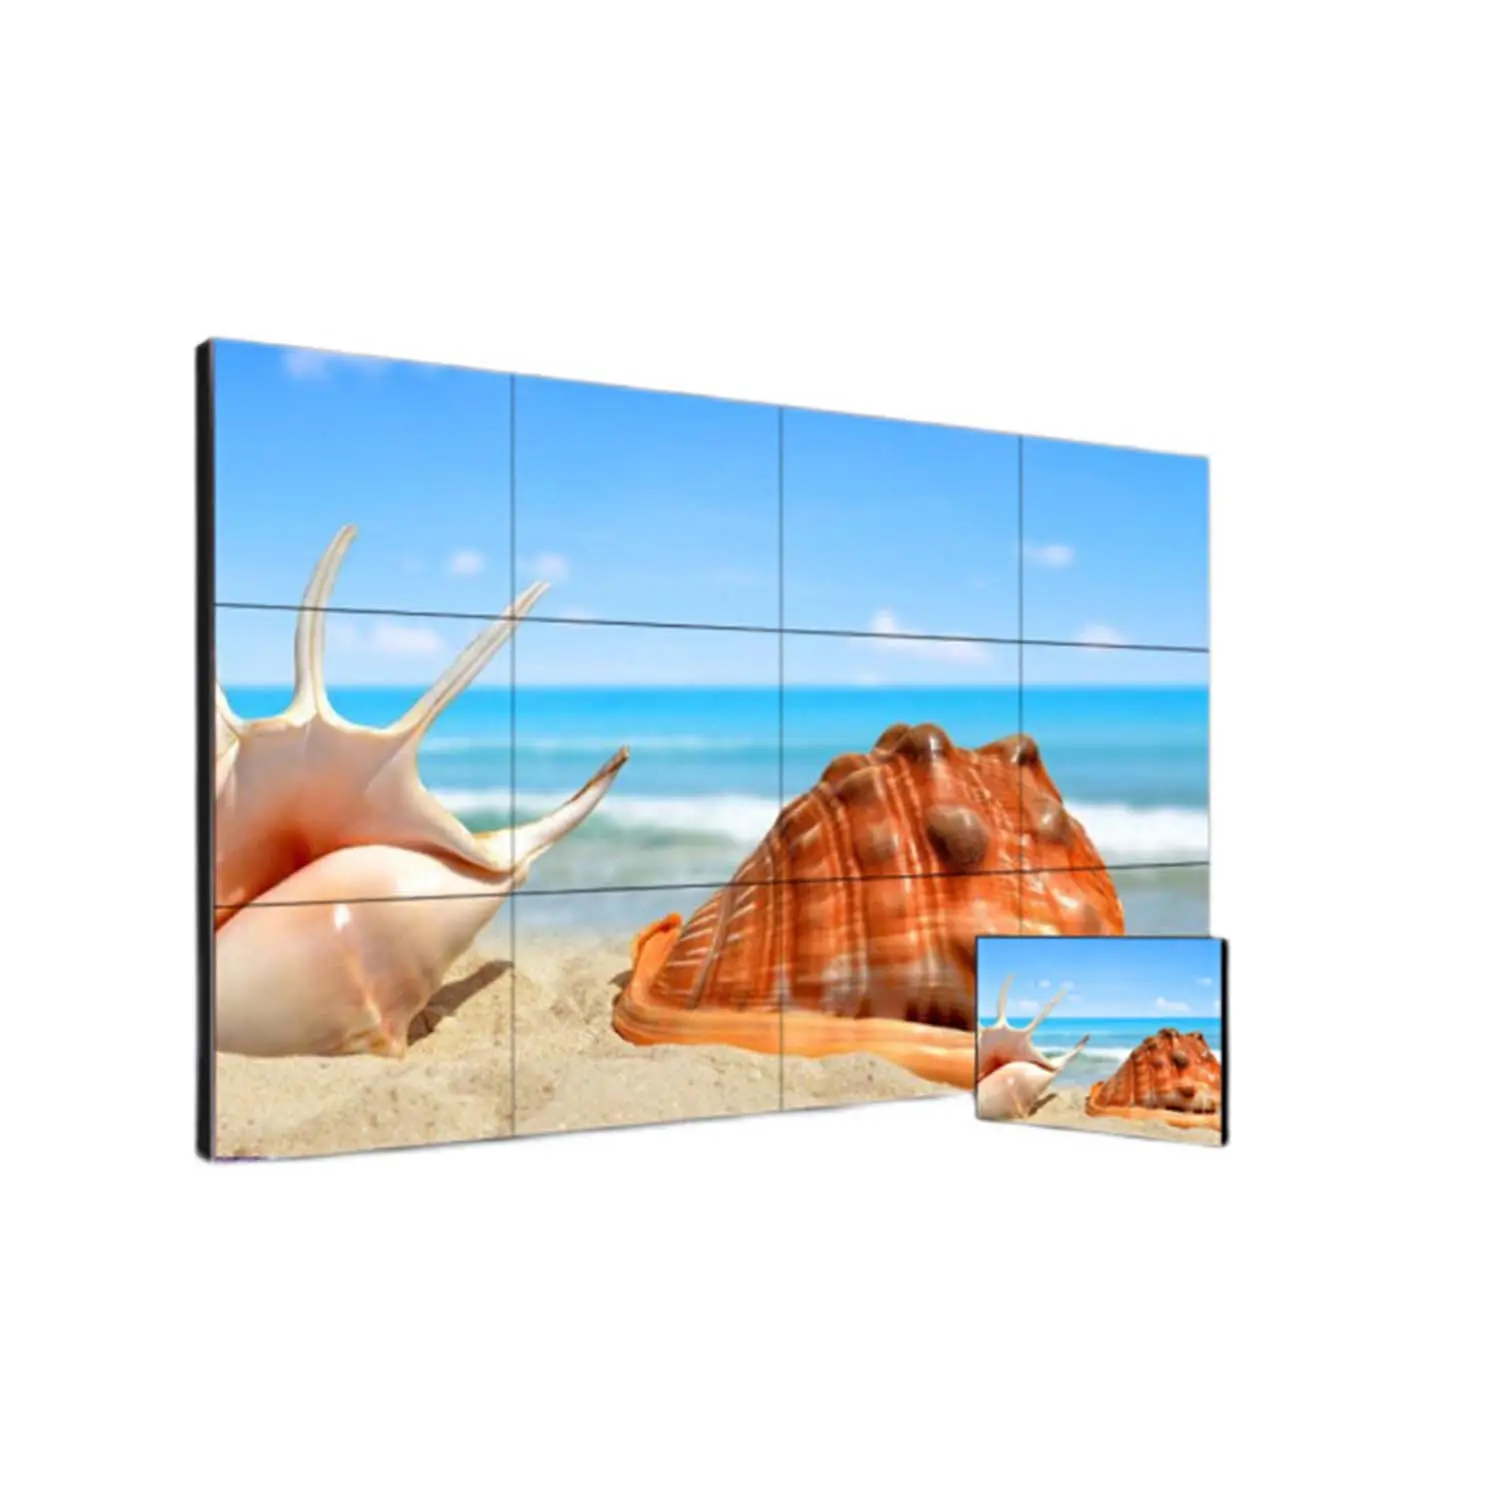 Hot Selling 47 inch TV LCDS S-IPS LG Display Panel Wall Mounted TV Screen Monitor LD470DUN-TFB1 LCD Panel